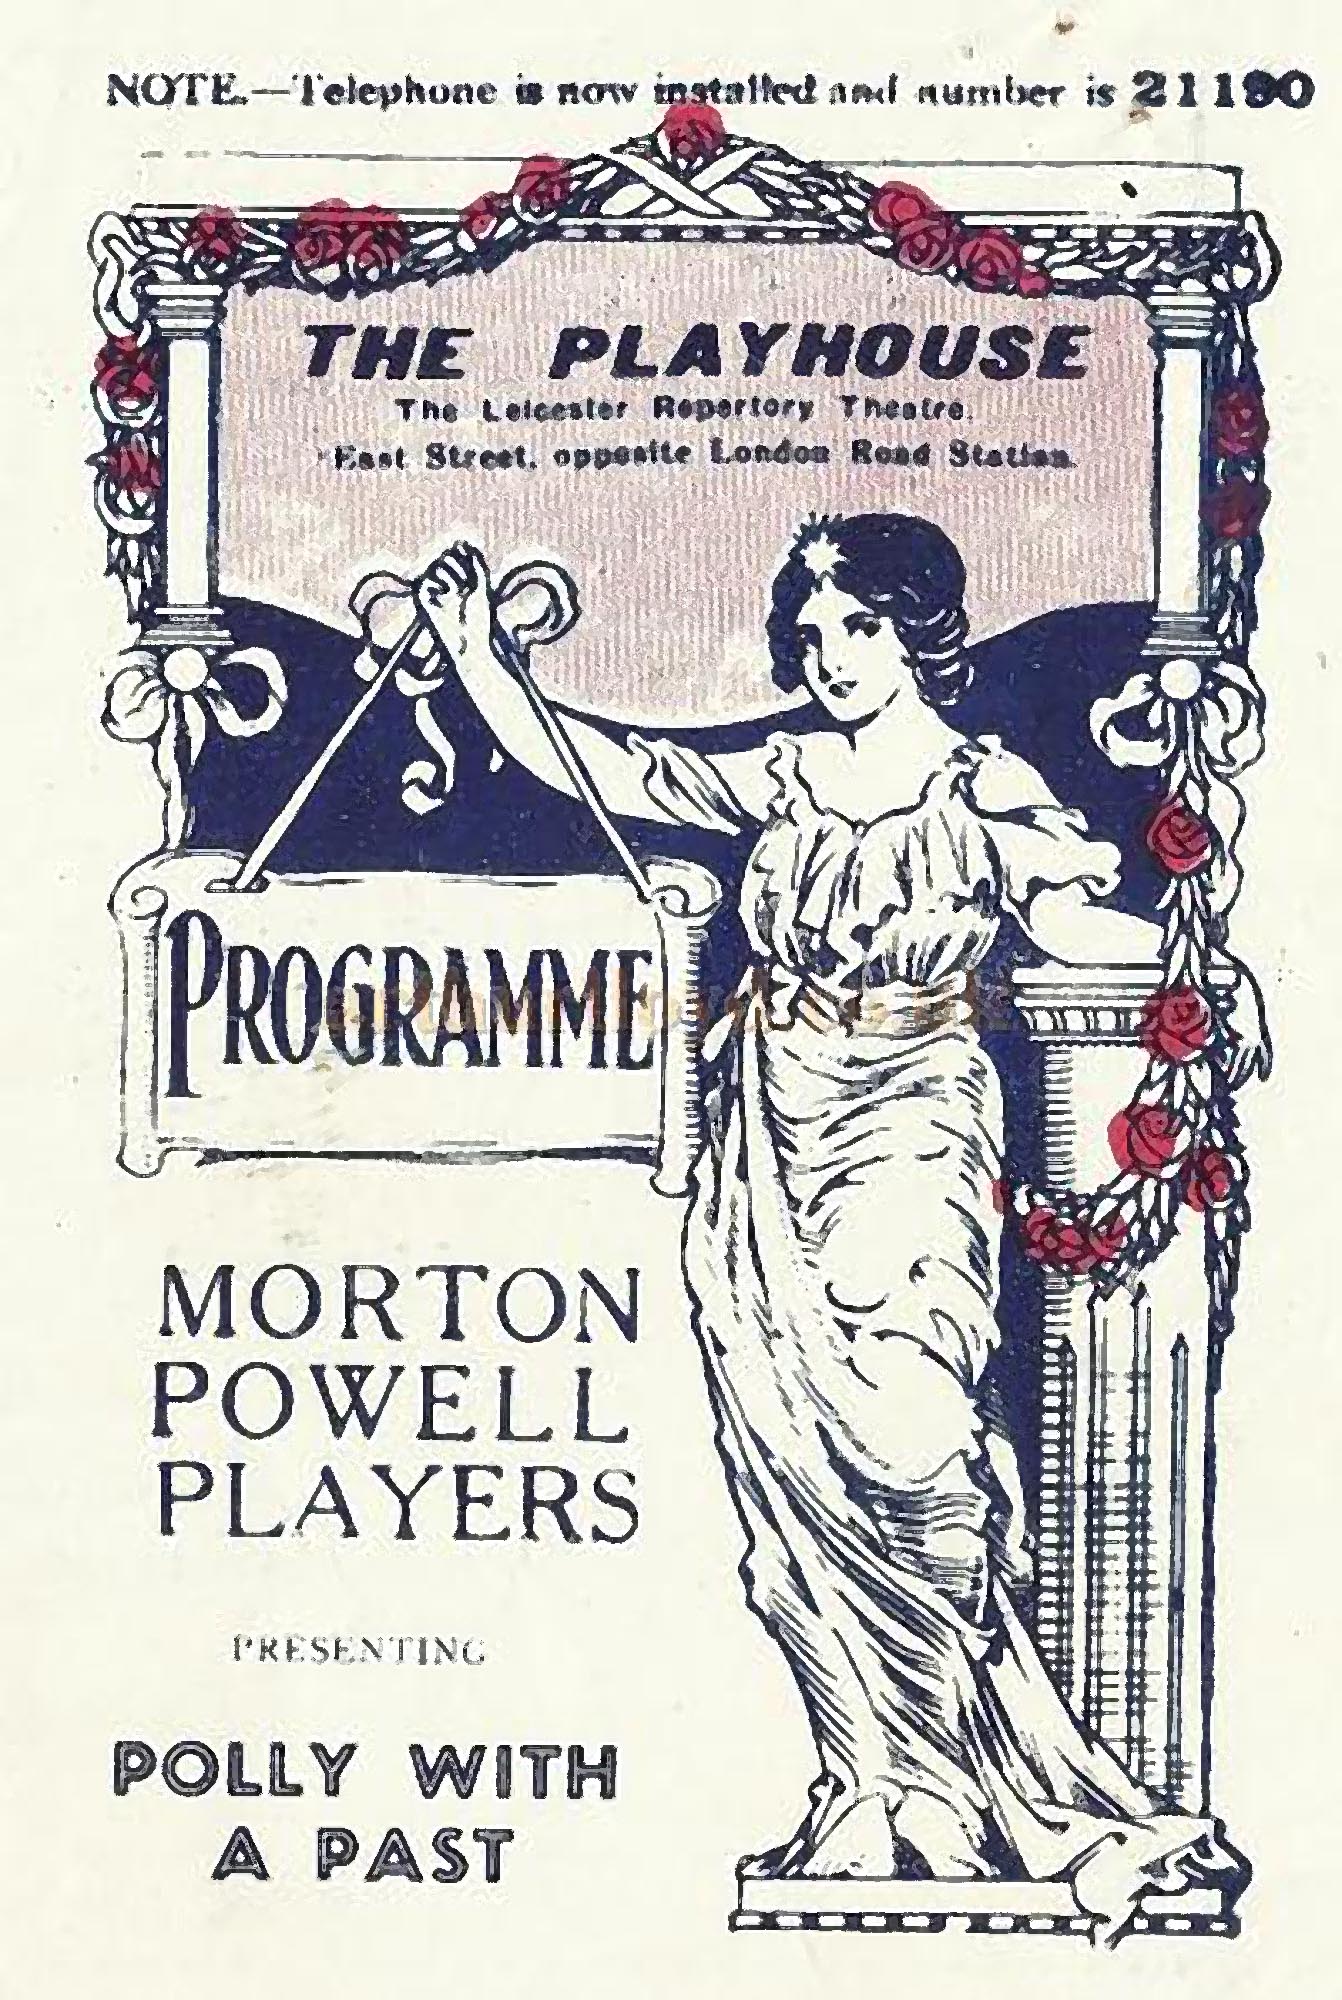 An early programme for The Playhouse Theatre - David Garratt and arthurlloyd.co.uk